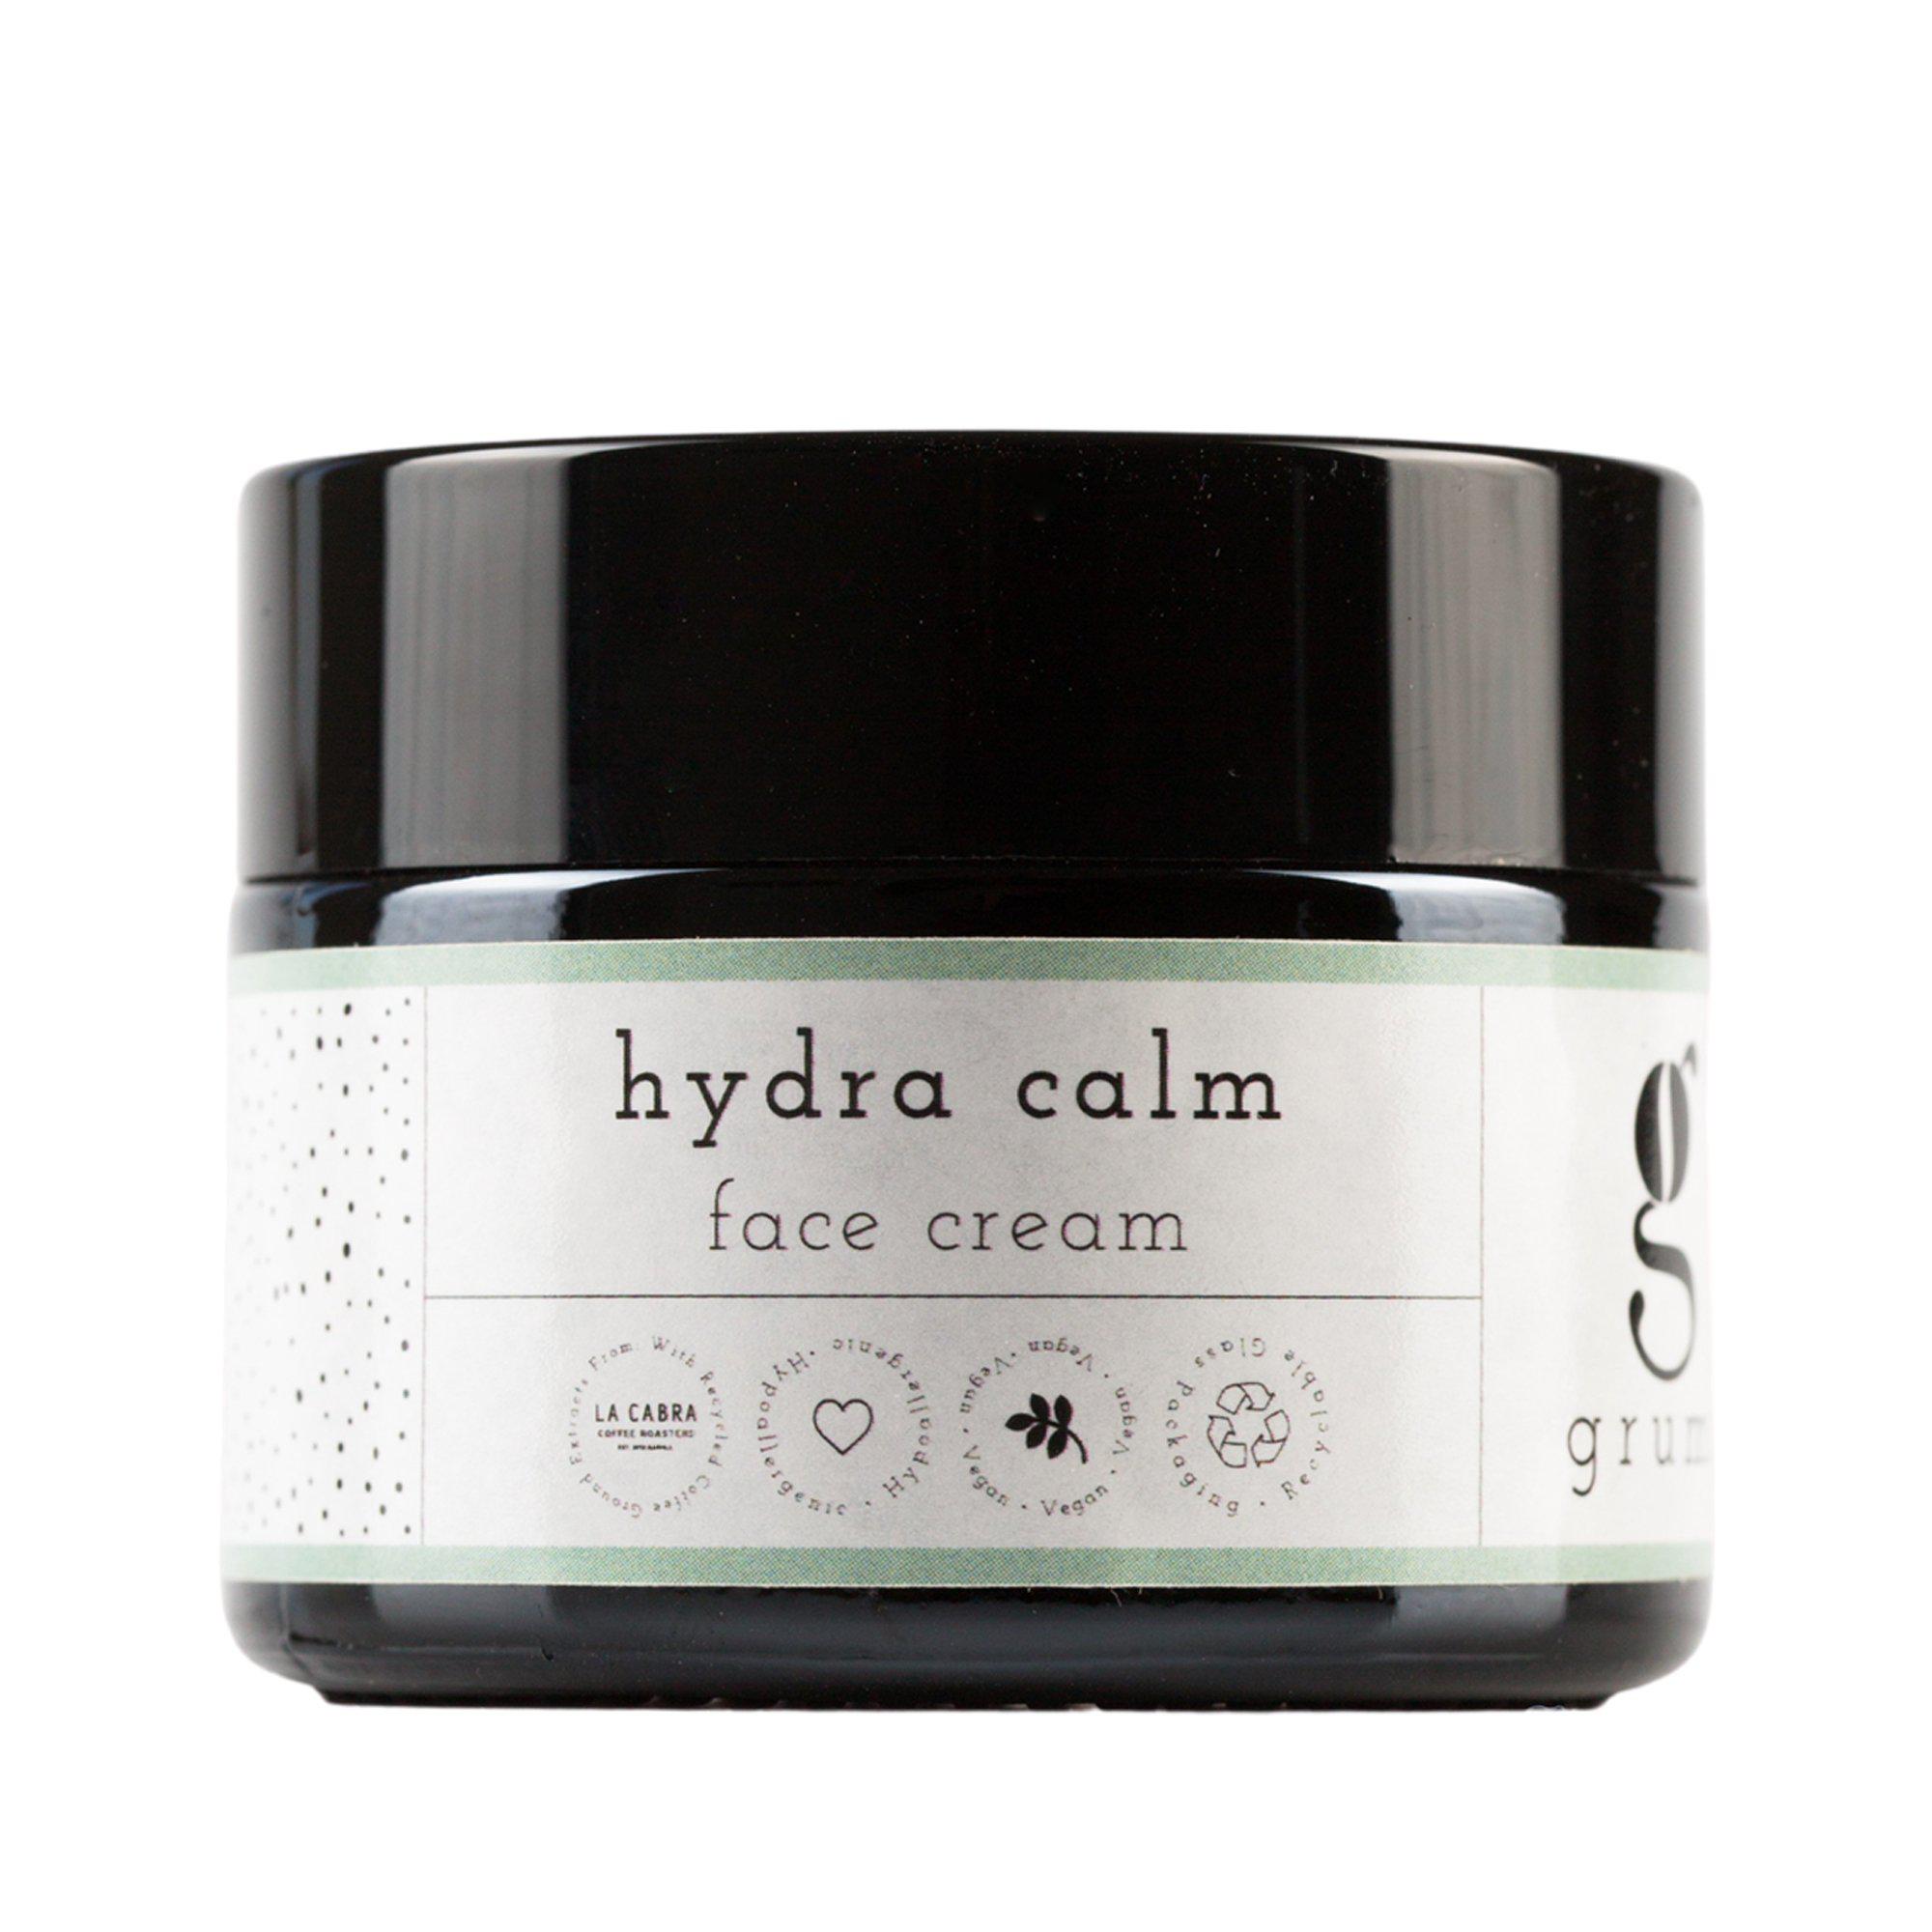 Hydra Calm Face Cream Crème Hydratante Apaisante Hydra Calm Face Cream Crème Hydratante Apaisante - Grums Aarhus